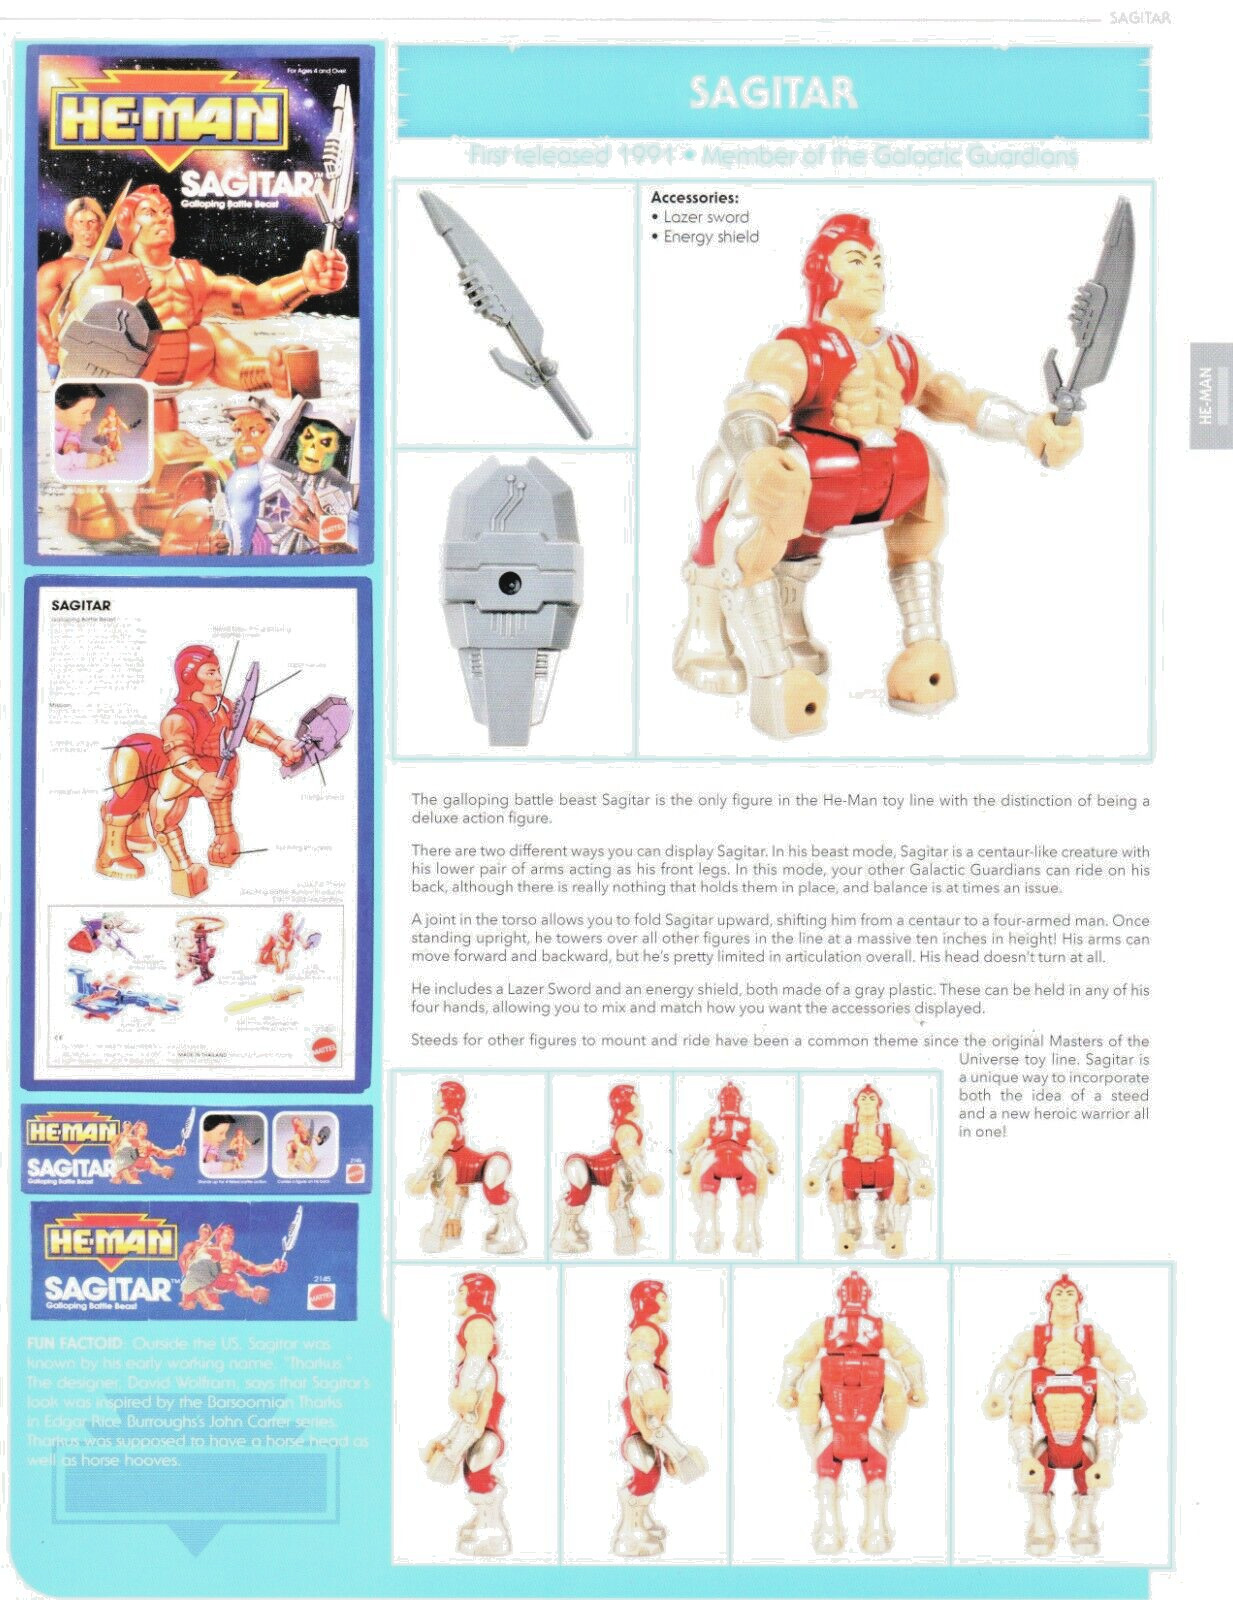 HE-MAN MOTU SAGITAR Character Action Figure Pin-Up PRINT AD/POSTER 9x12 ART